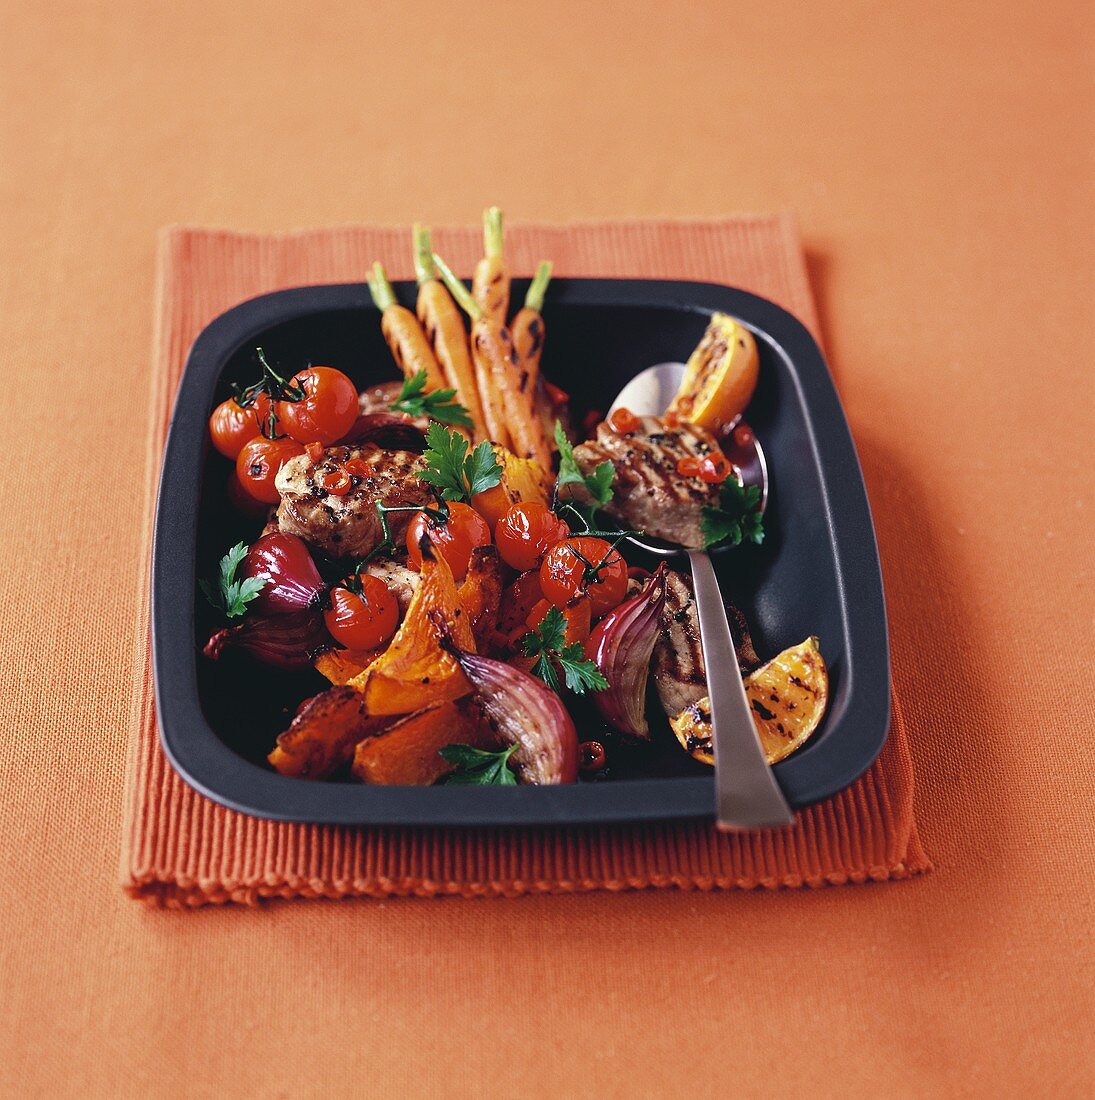 Grilled pork medallions with vegetables and oranges